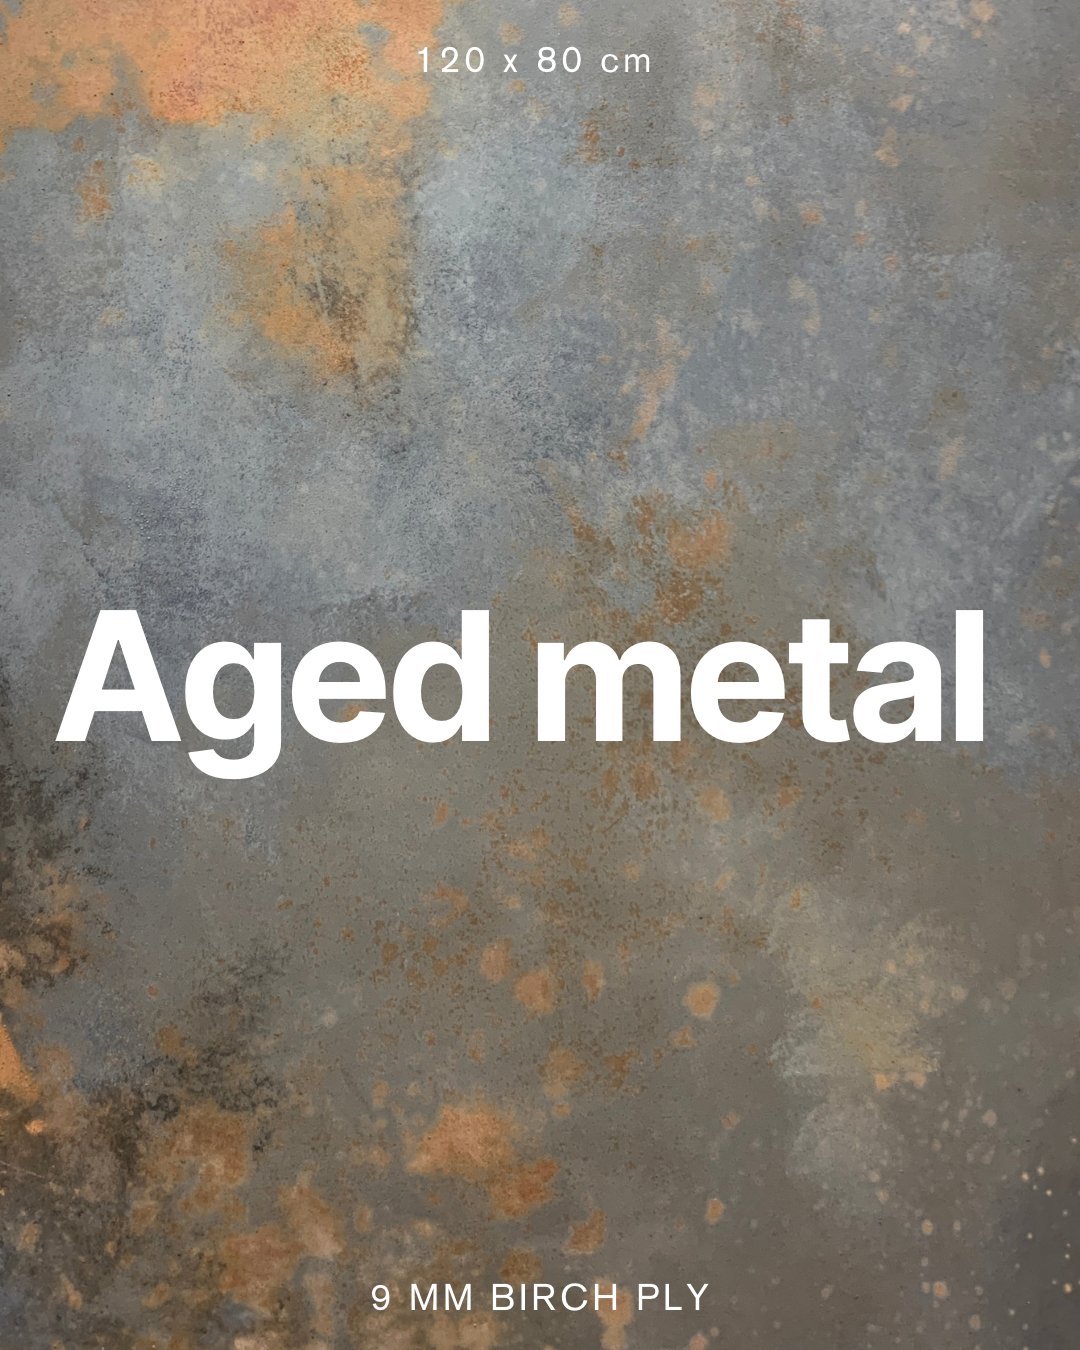 Aged metal